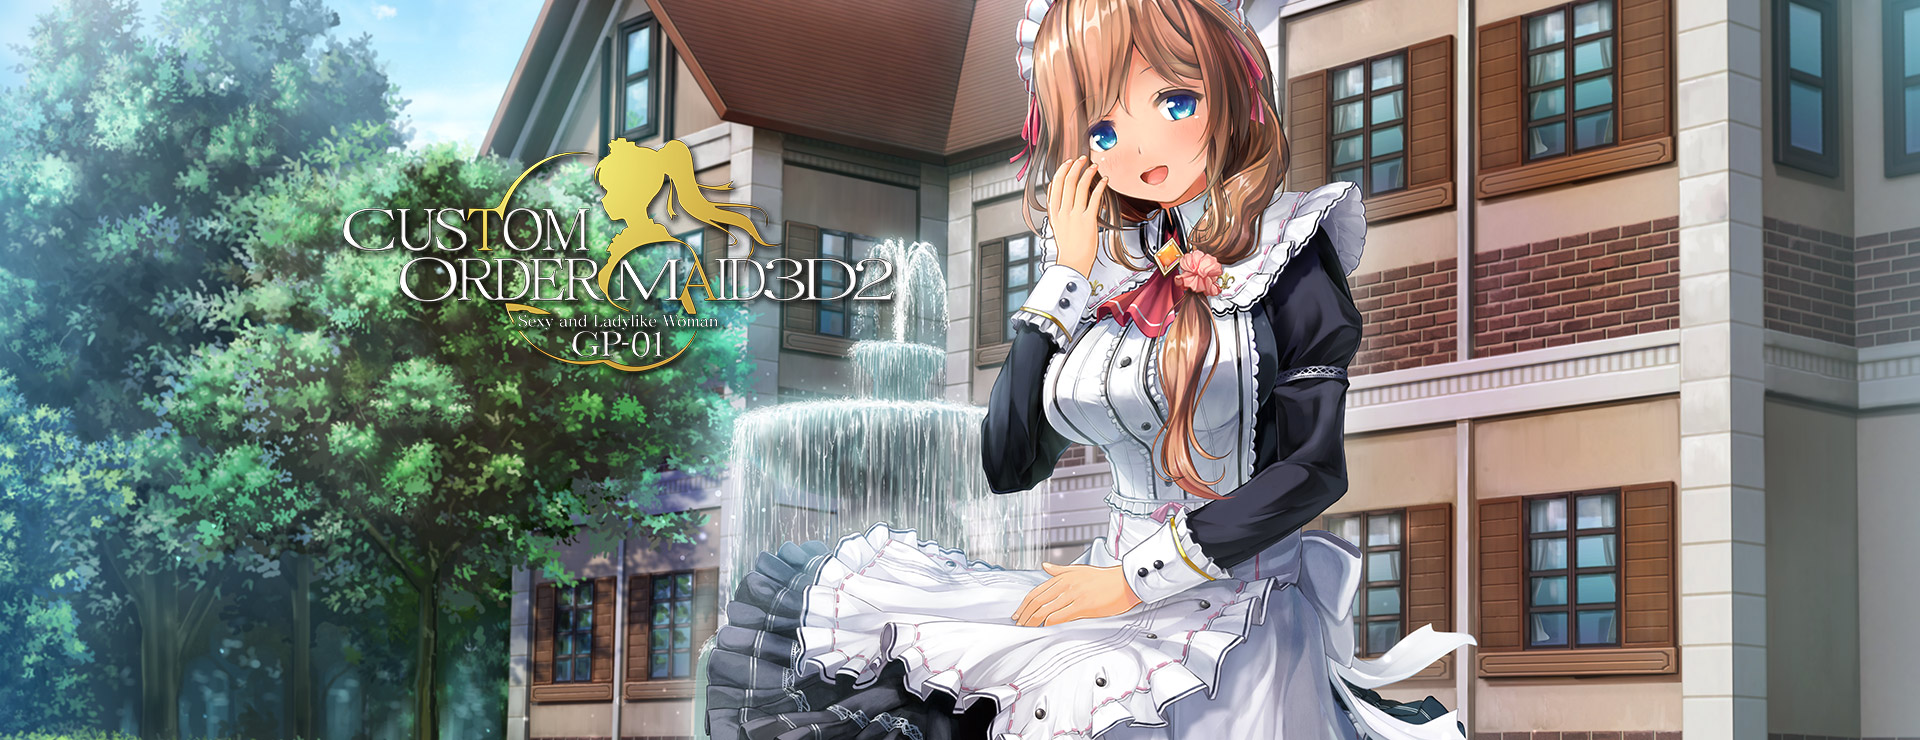 Custom Order Maid 3D 2: Sexy and Ladylike Woman GP01 - 动作冒险游戏 遊戲